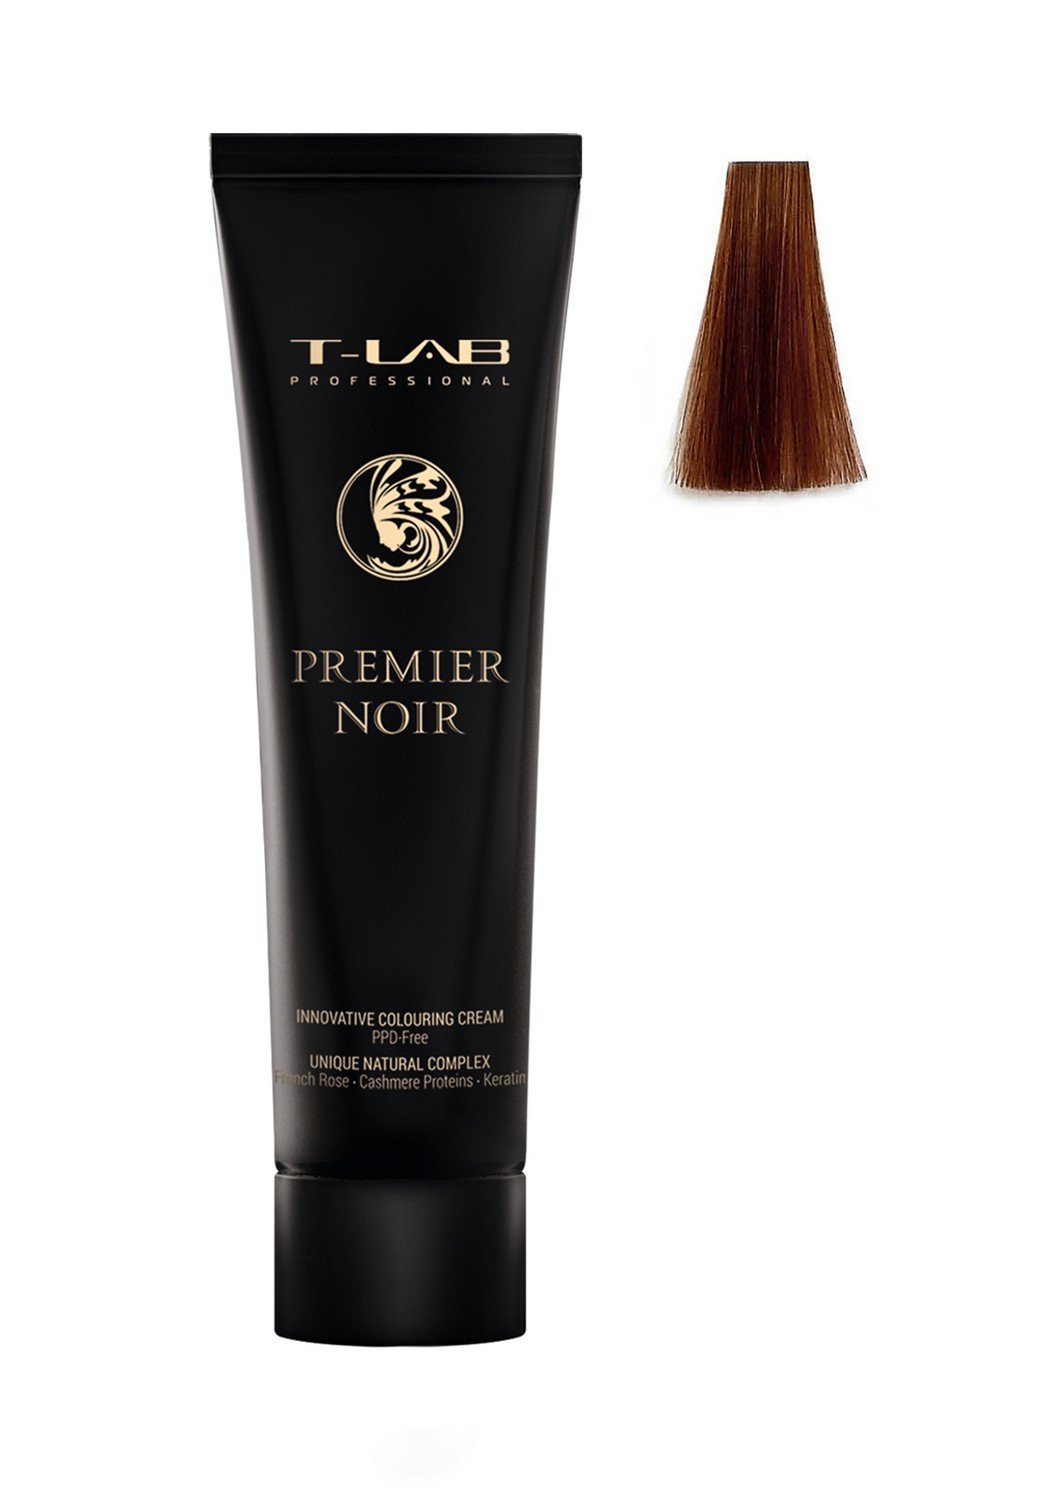 Крем-фарба T-LAB Professional Premier Noir colouring cream, відтінок 8.42 (light copper iridescent blonde) - фото 2